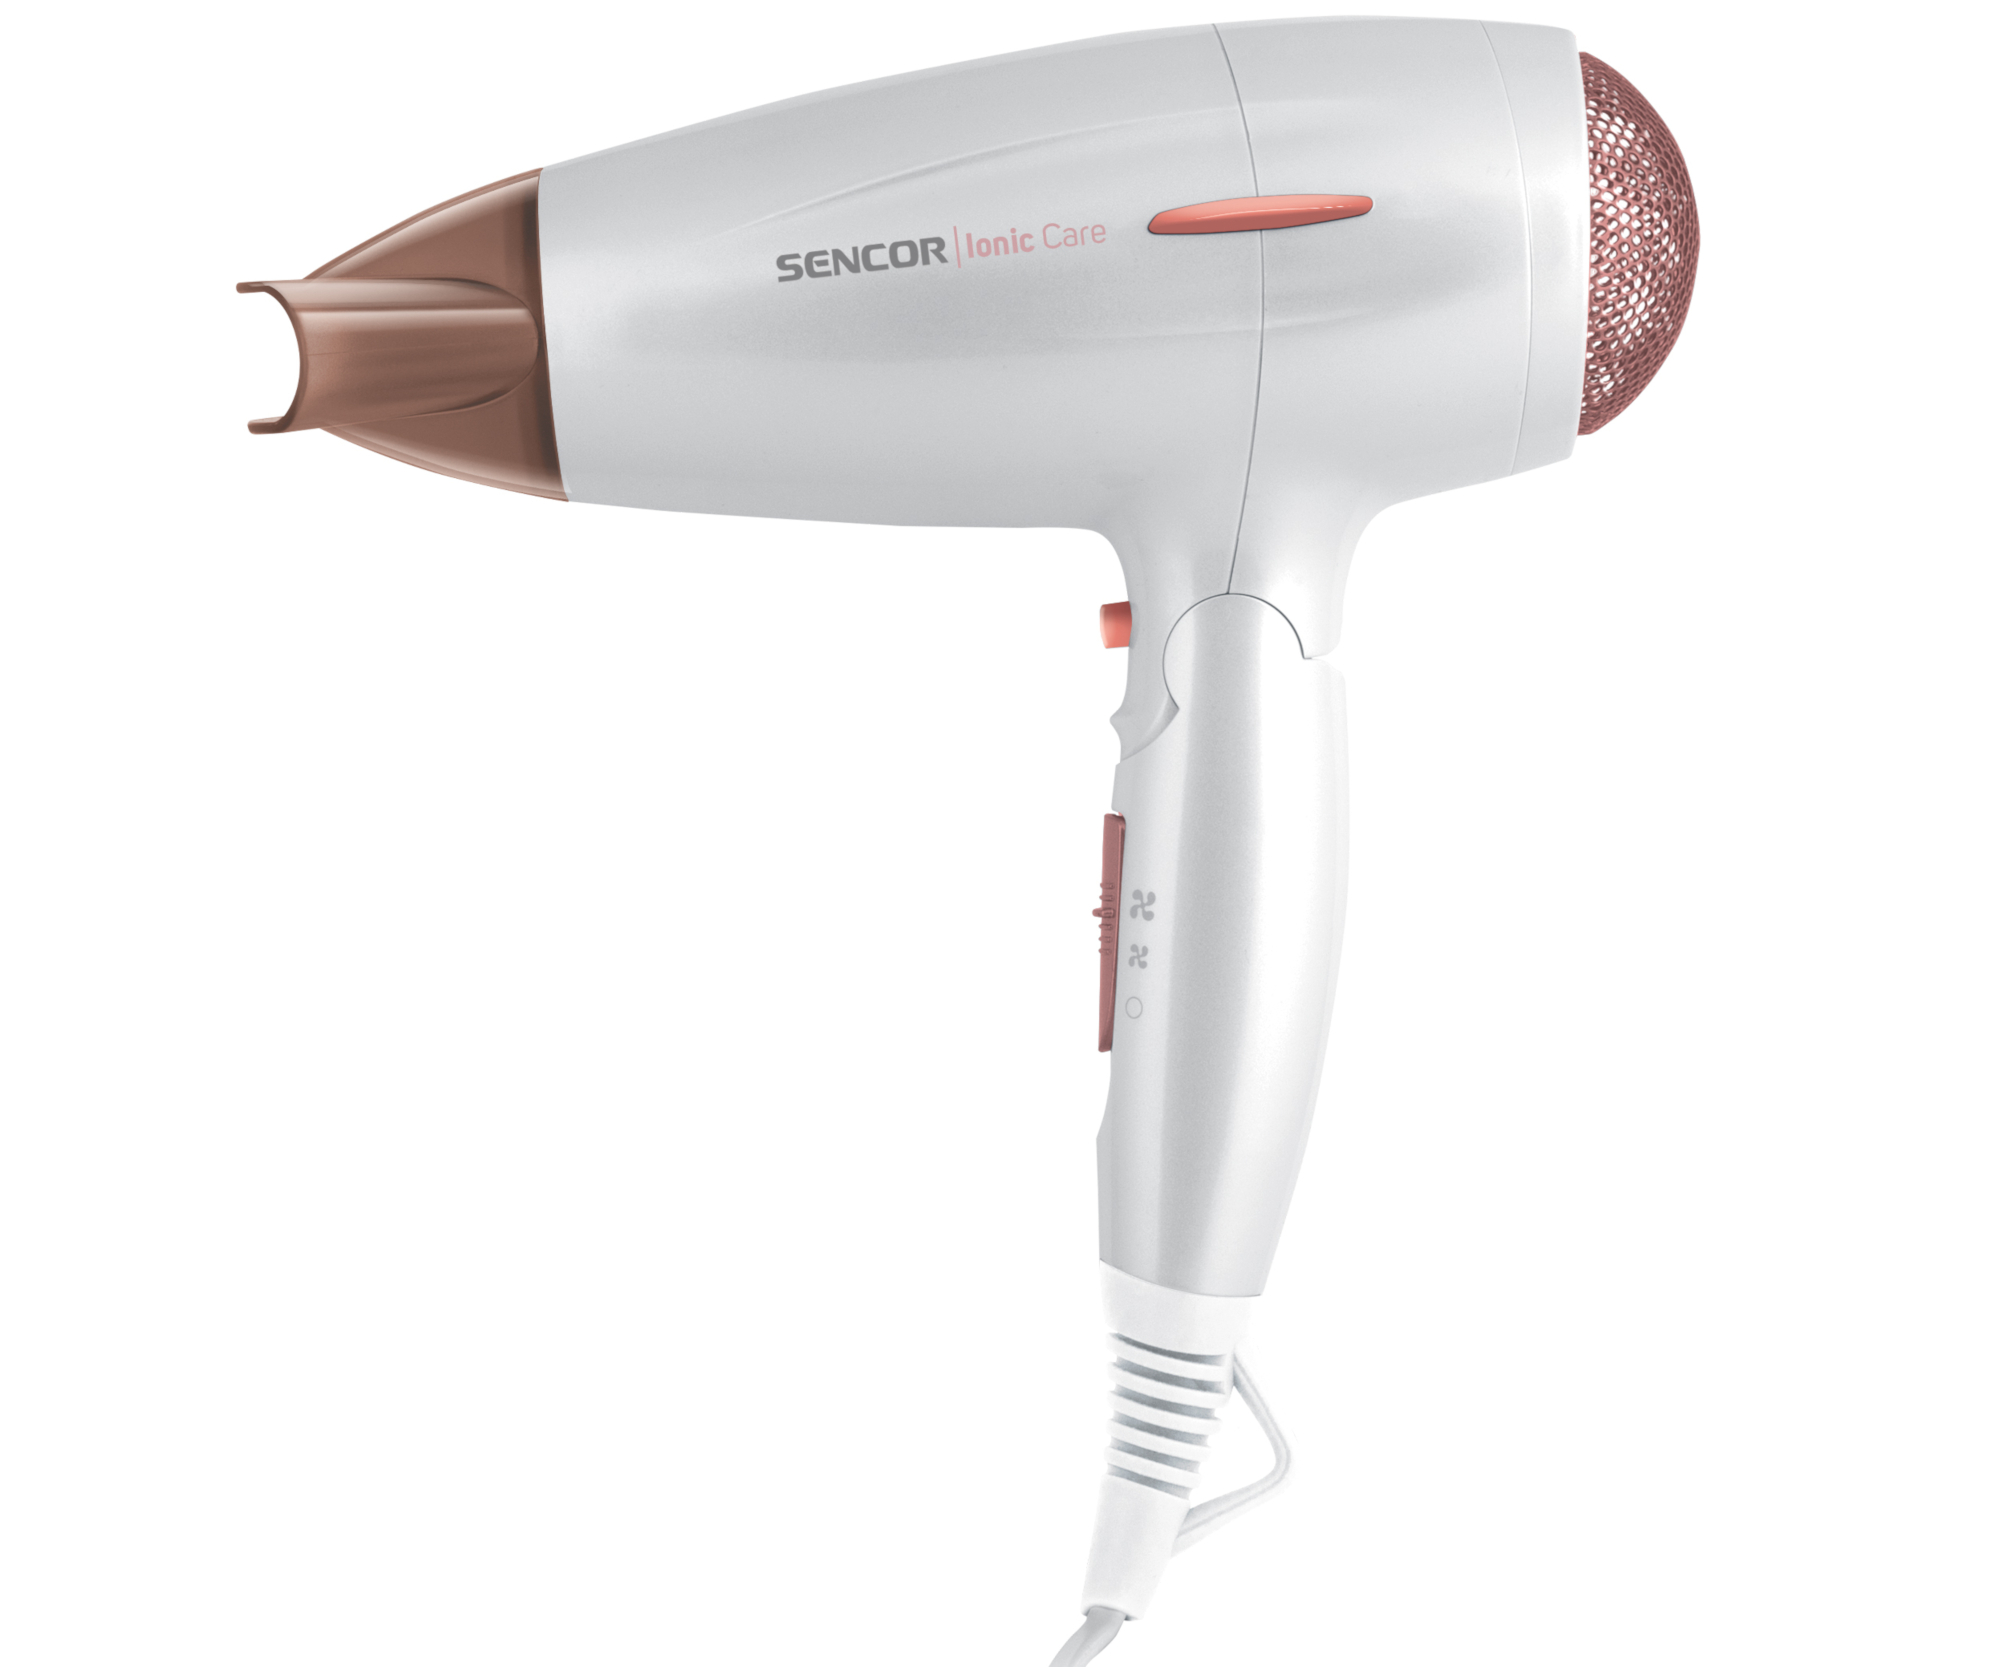 Cestovní fén na vlasy Sencor SHD 7200GD - 2000 W, bílý + DÁREK ZDARMA